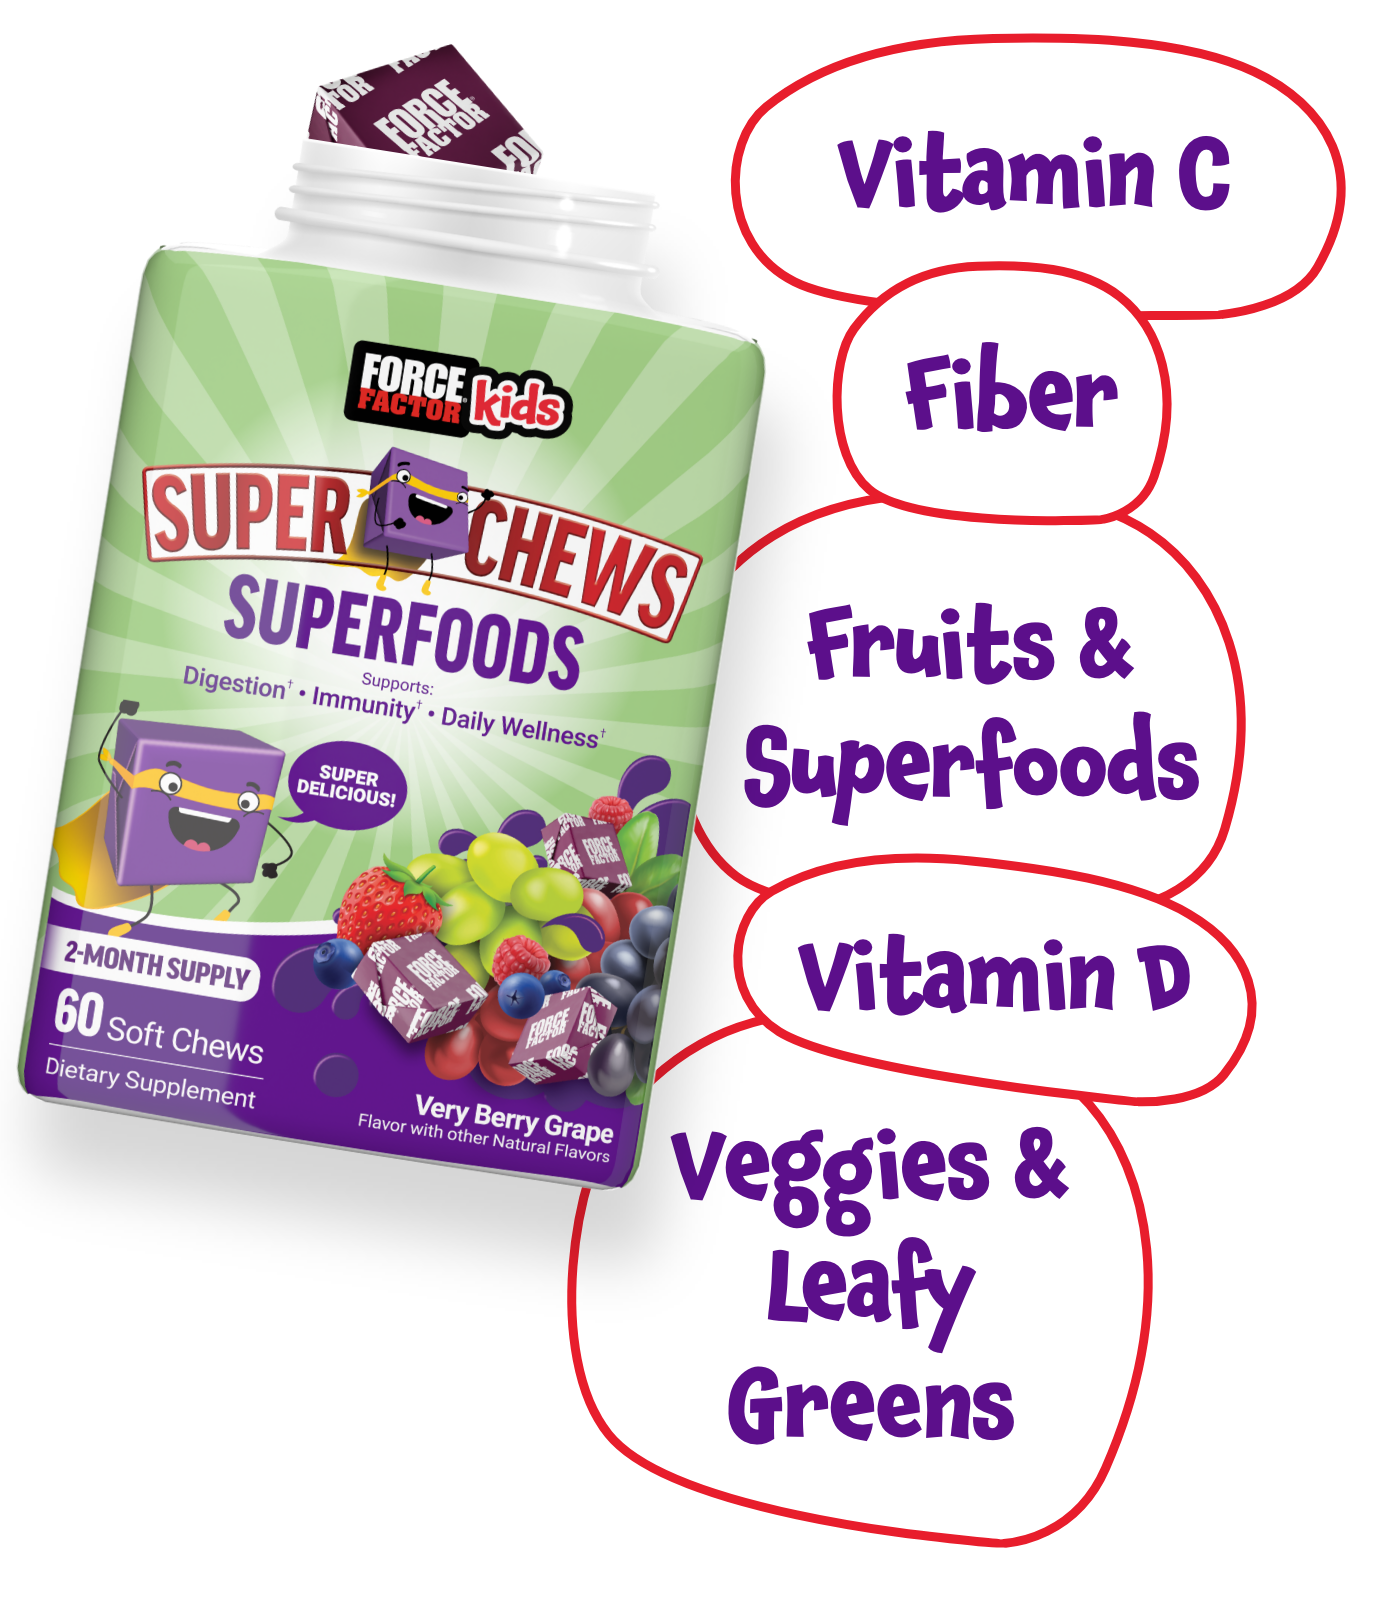 Vitamin C, Fiber, Fruits & Superfoods, Vitamin D, Veggies & Leafy Greens